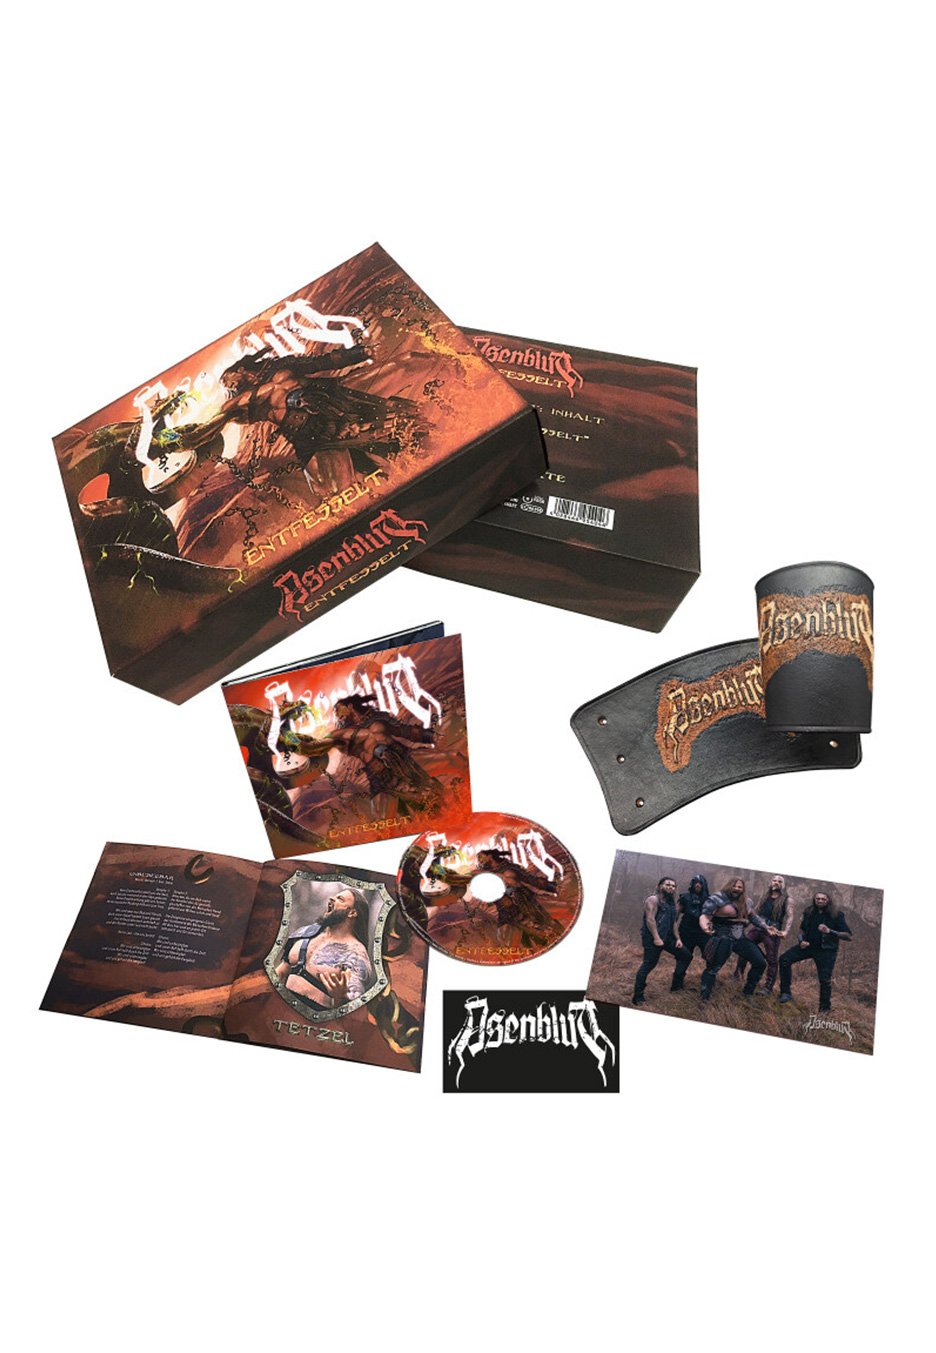 Asenblut - Entfesselt Ltd. - CD Box Set